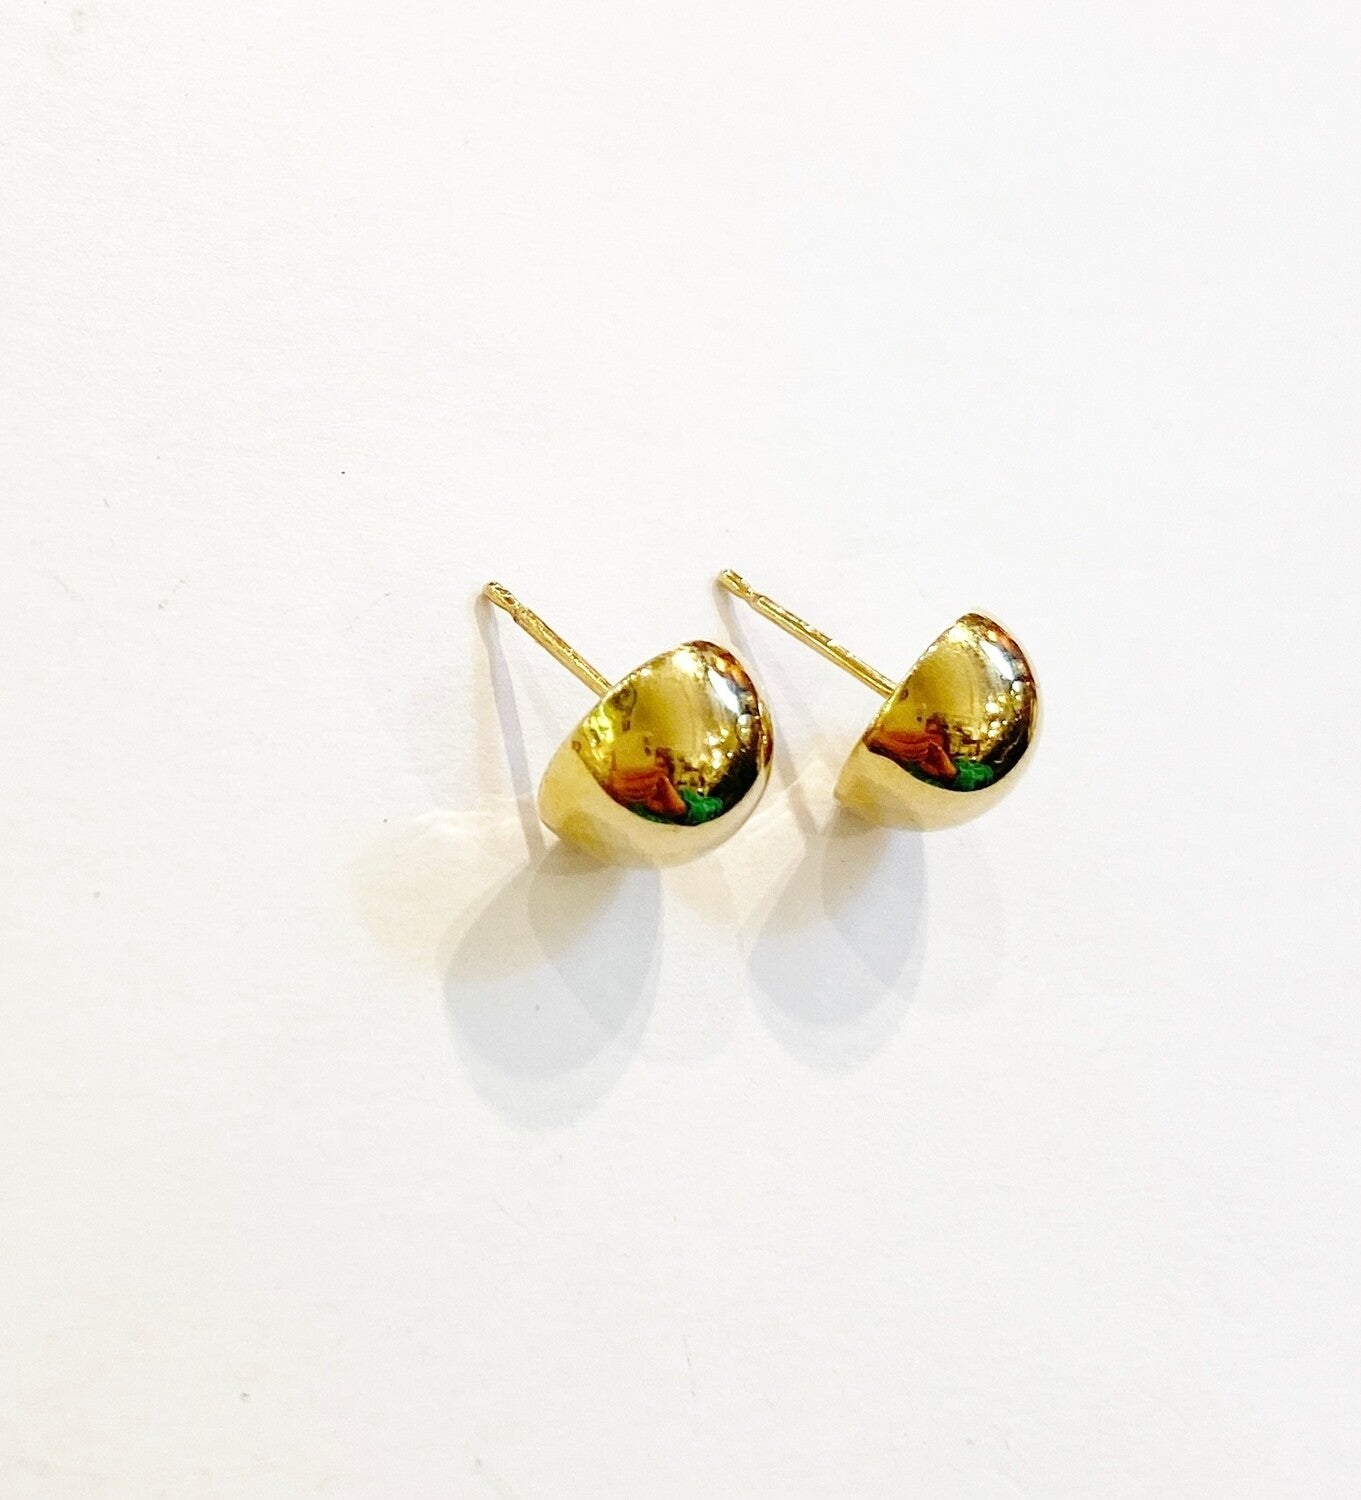 9ct pre owned gold stud earrings